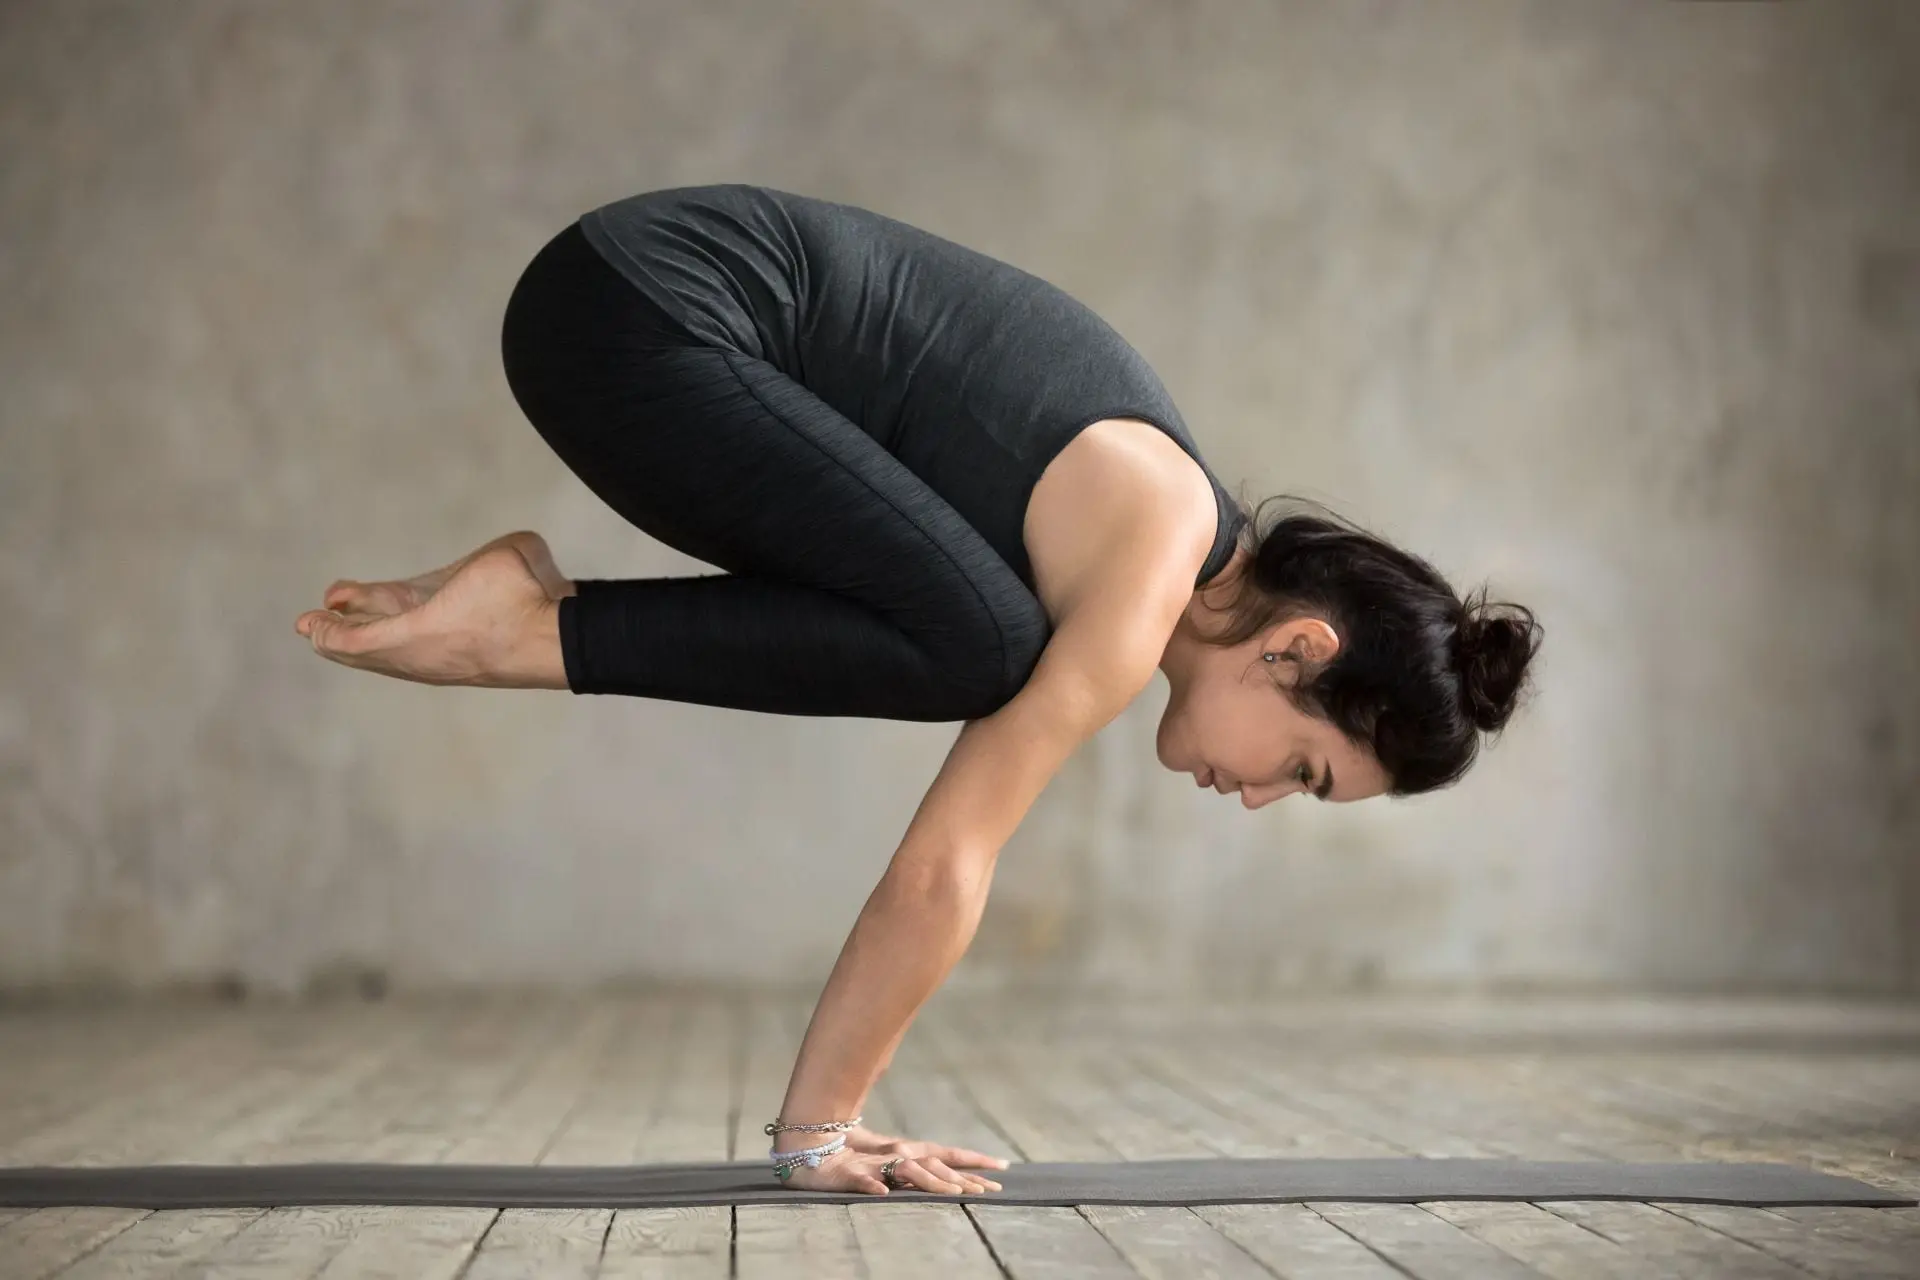 How to do Crow Pose (Bakasana) and Benefits - Yoga Blog